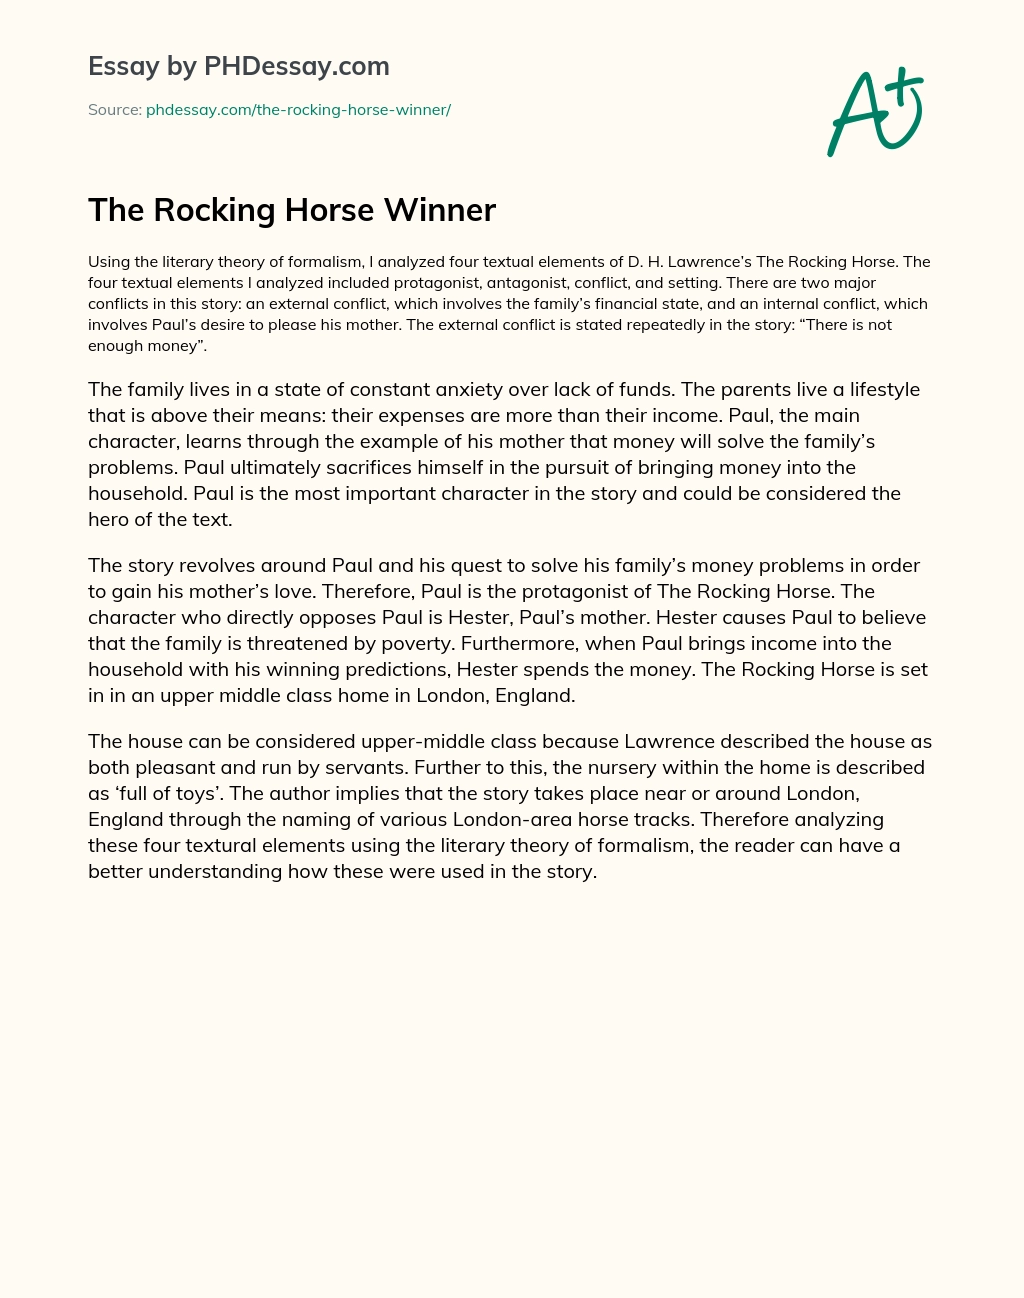 The Rocking Horse Winner essay